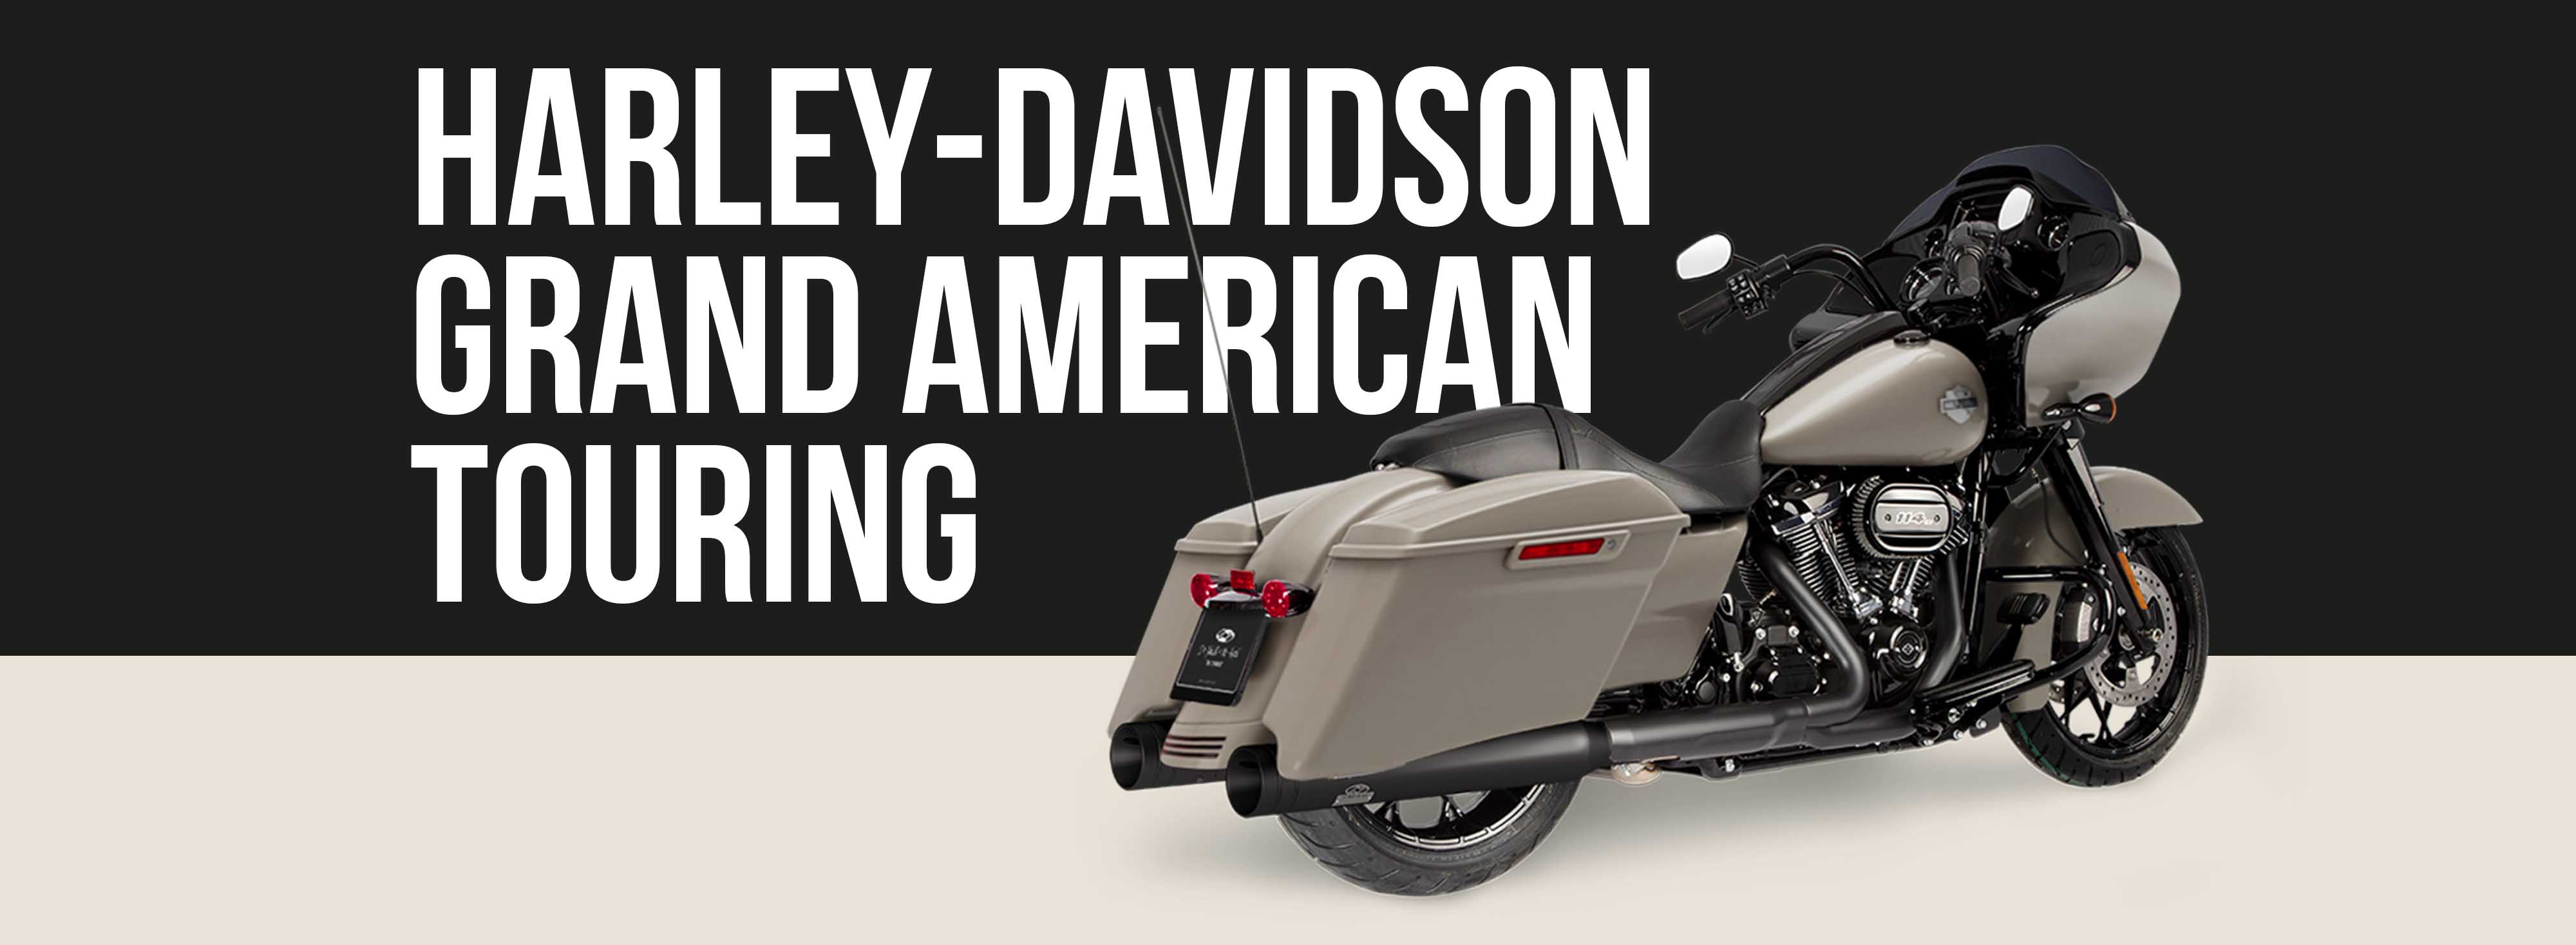 Harley-davidson Grand American Touring Motorcycle Brand Page Header